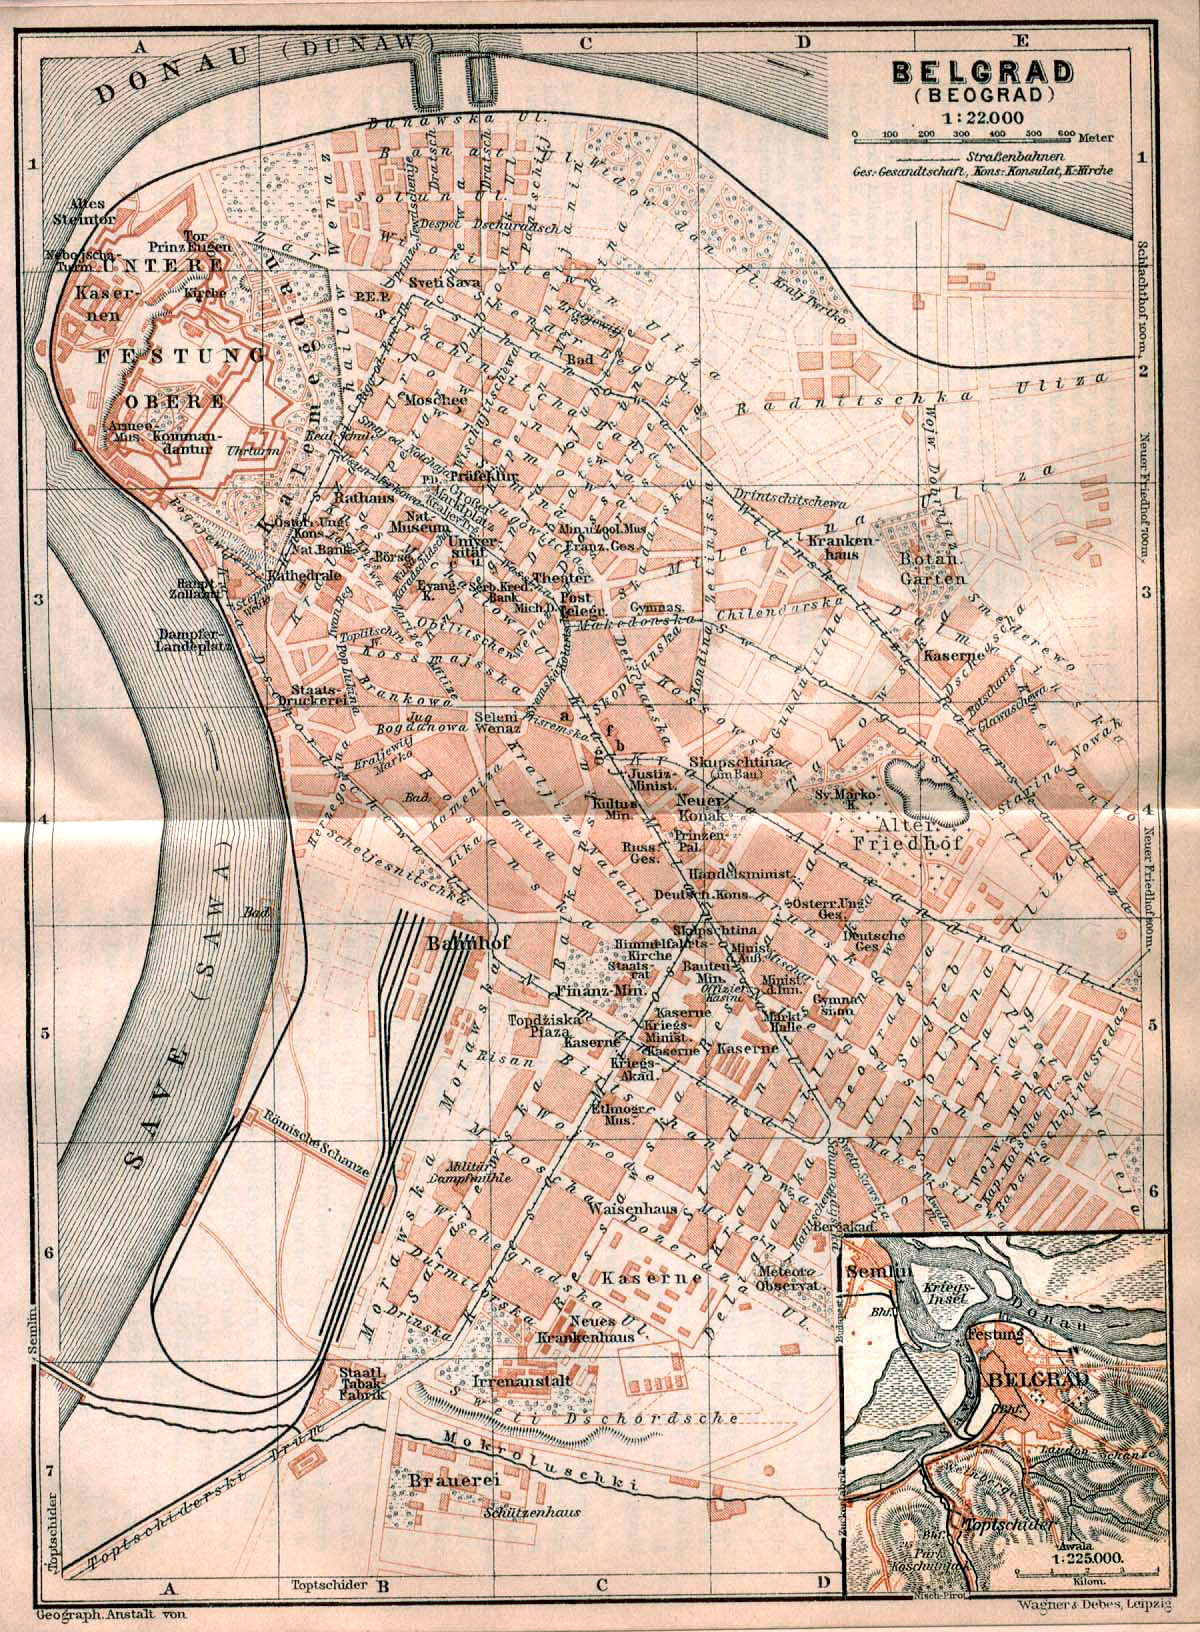 Map of Belgrade (Beograd) 1905